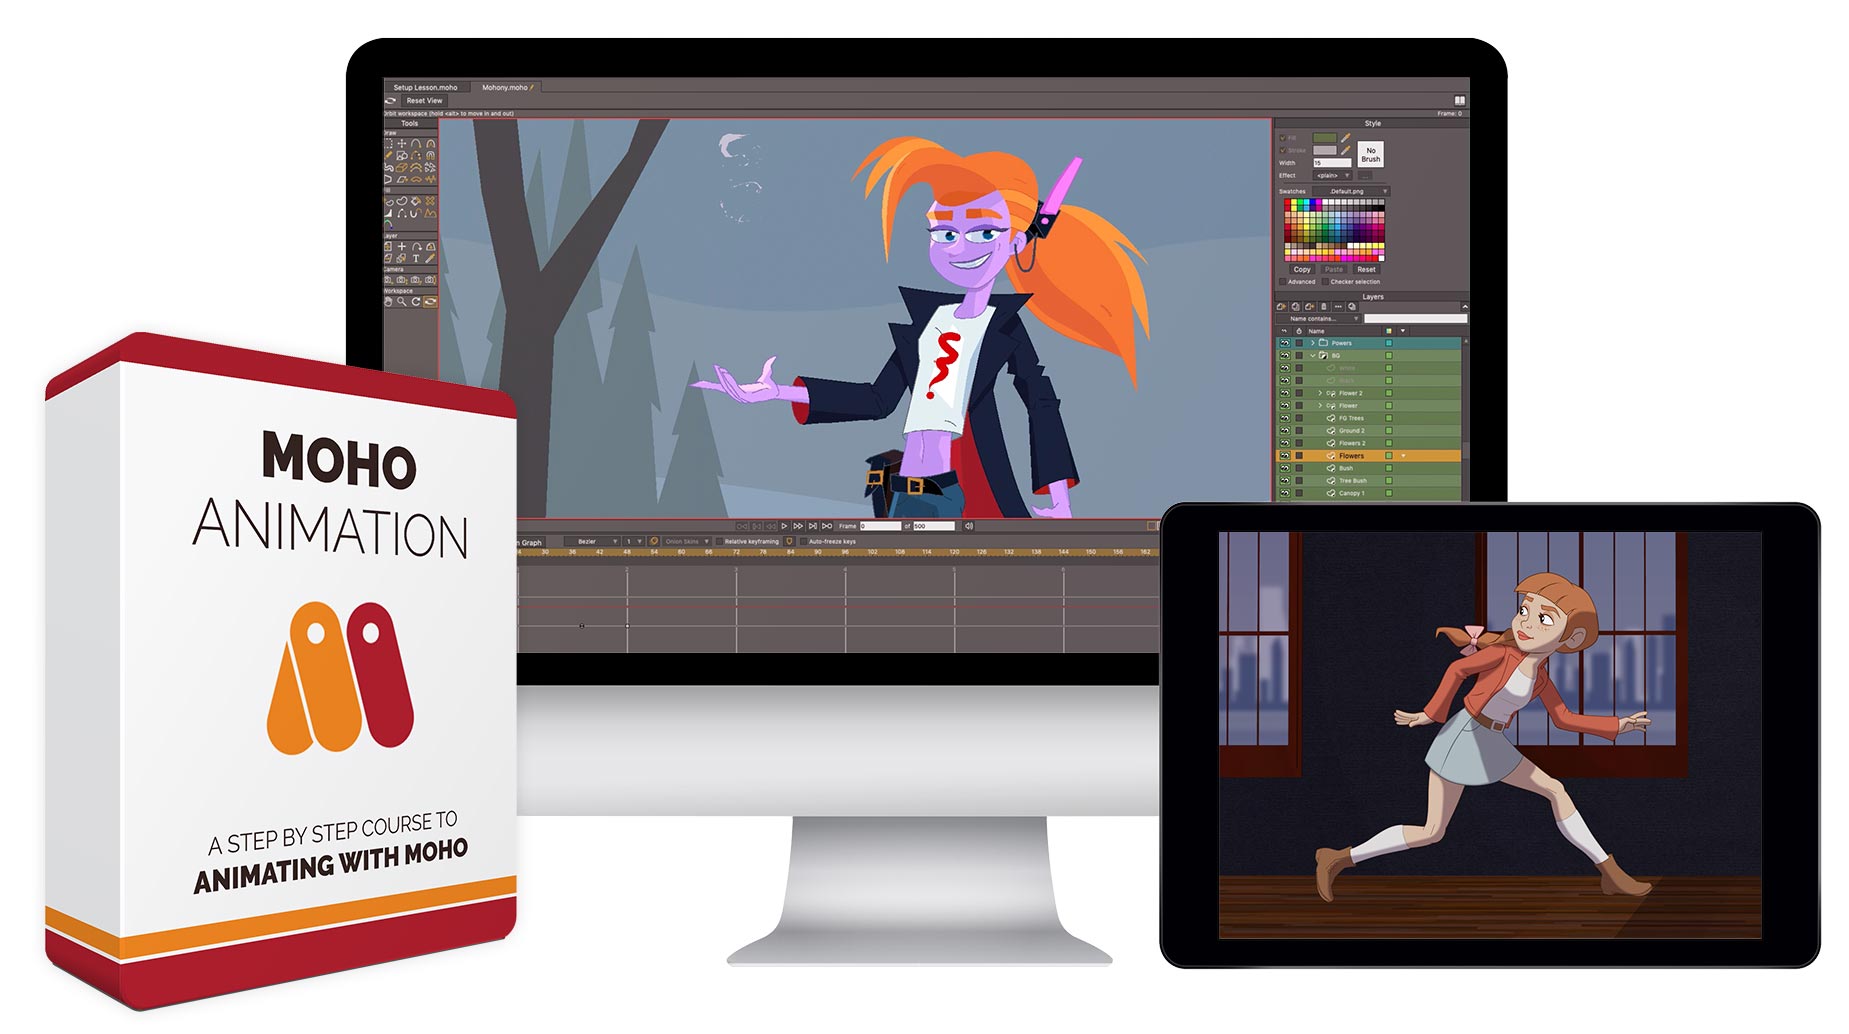 Bloop Animation - Moho Animation FREE DOWDOWNLOAD 